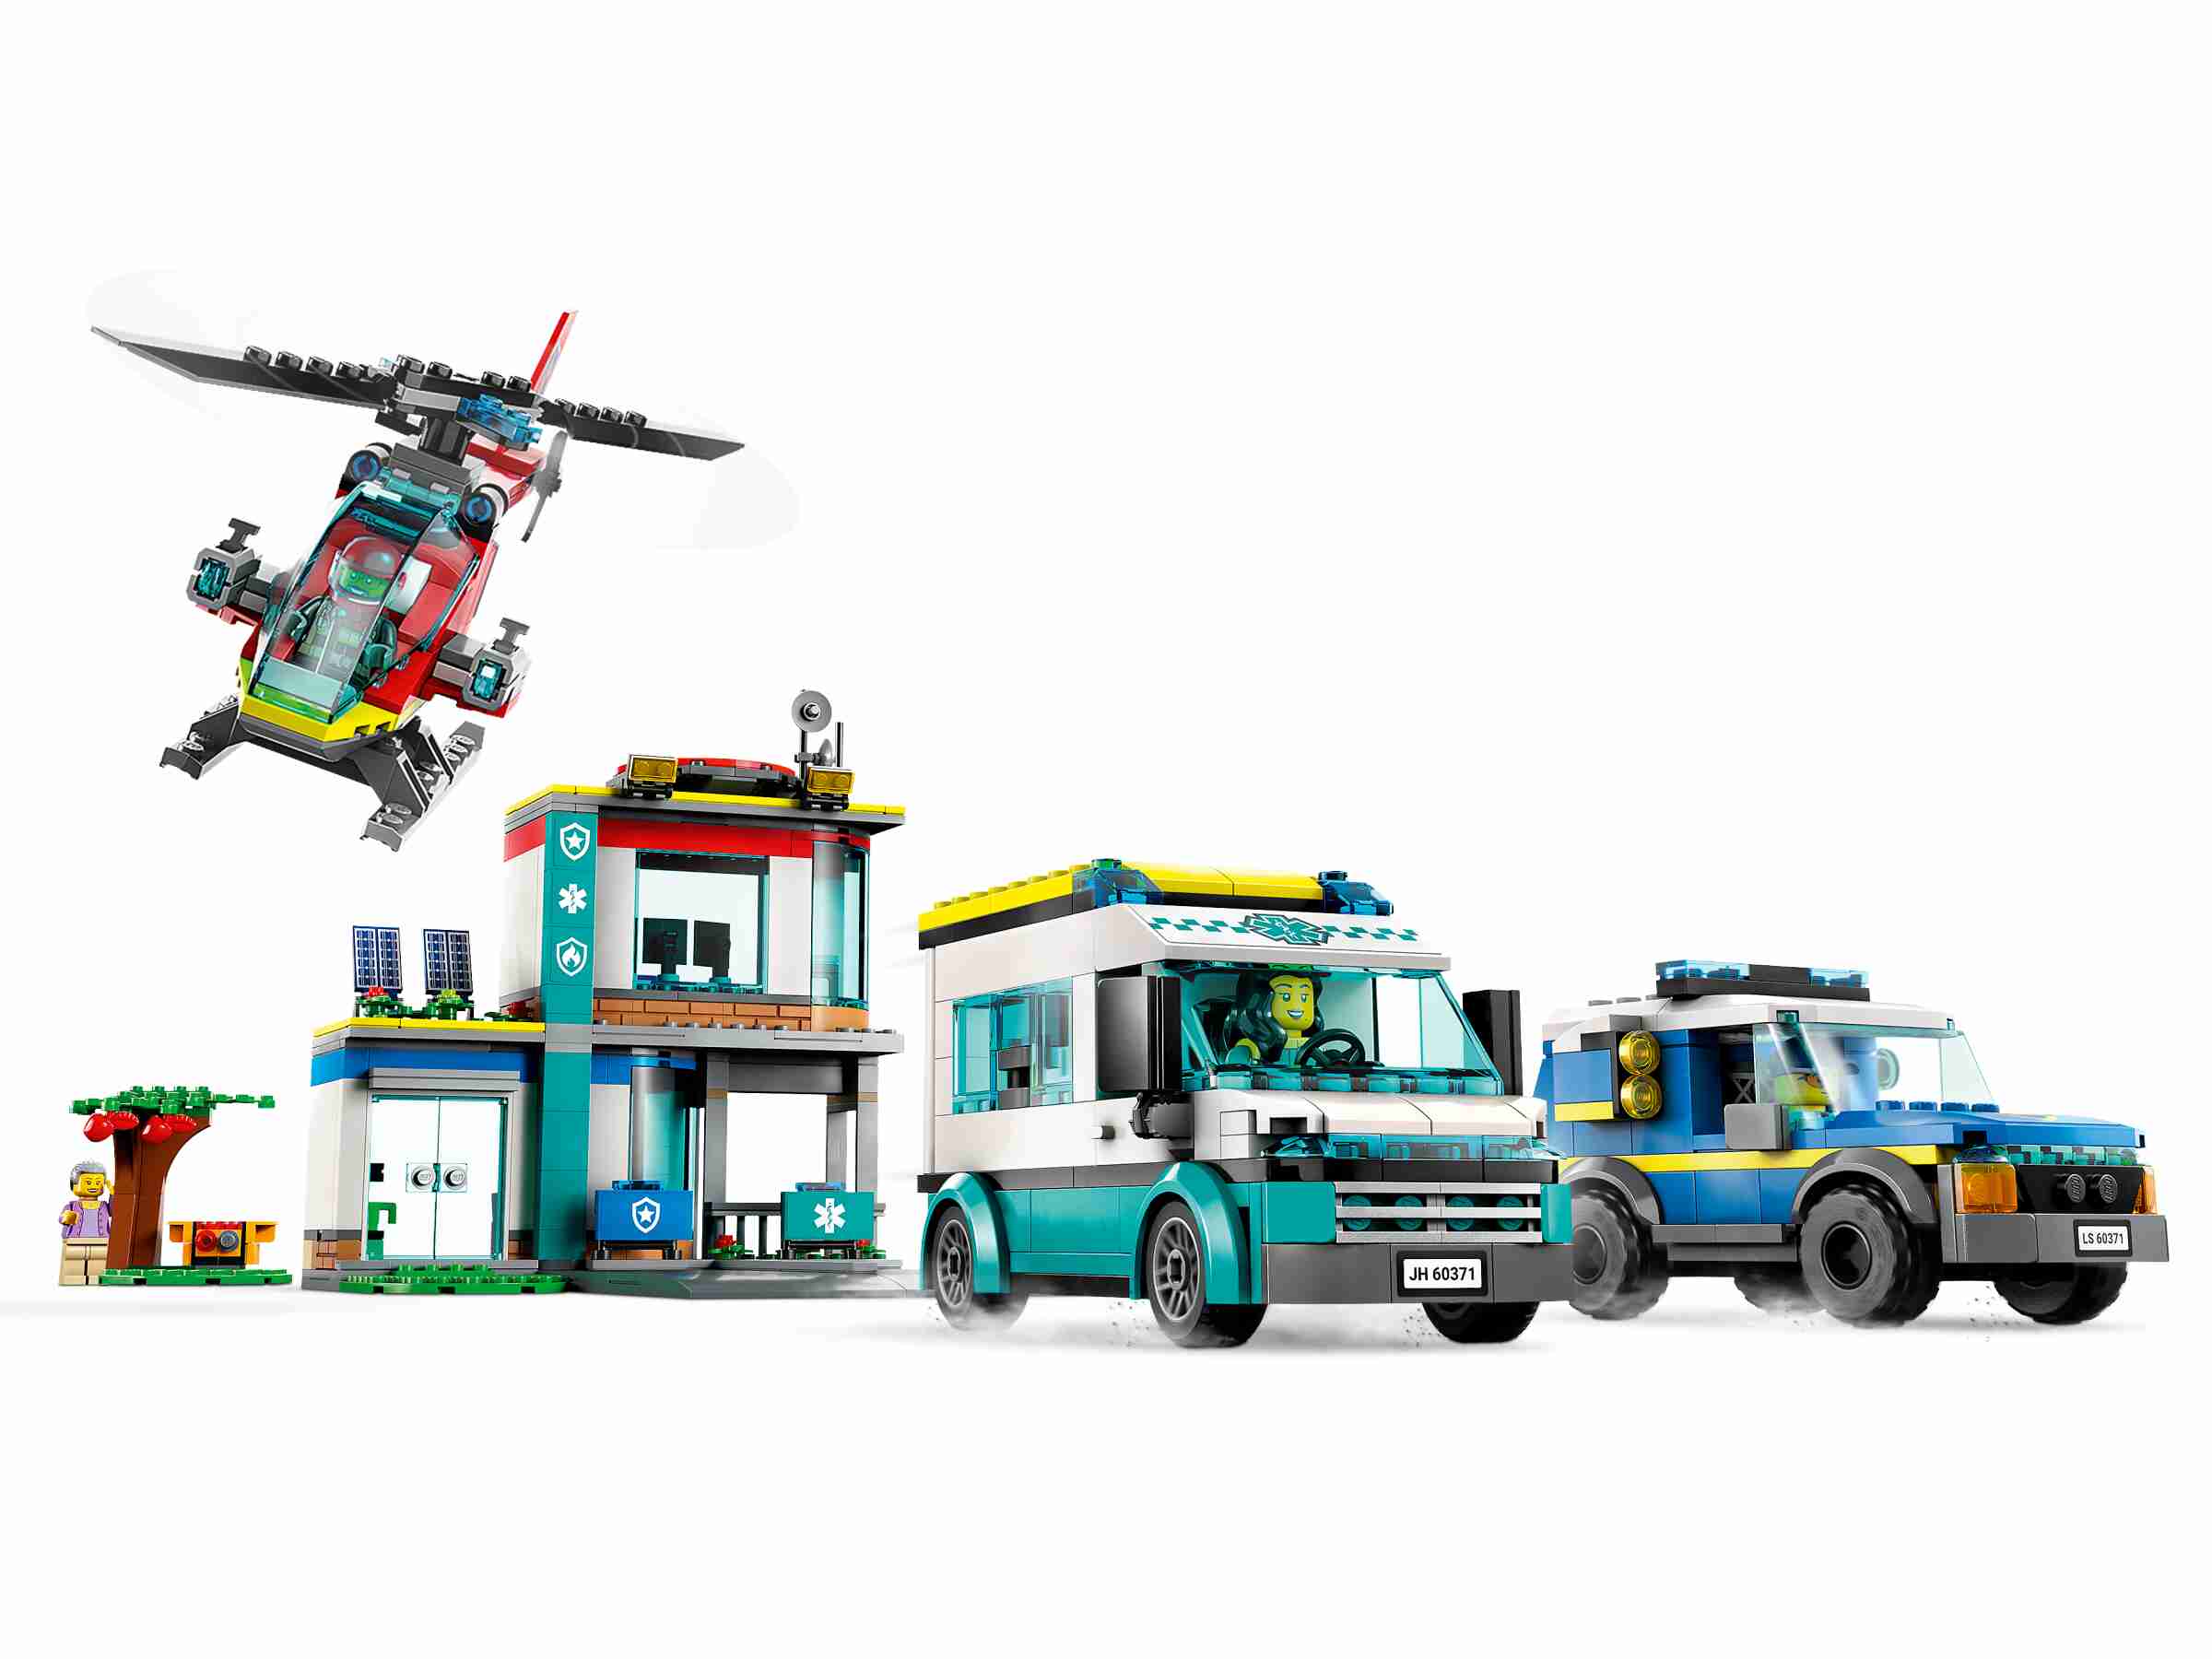 LEGO 60371 City Hauptquartier der Rettungsfahrzeuge, 5 Minifiguren